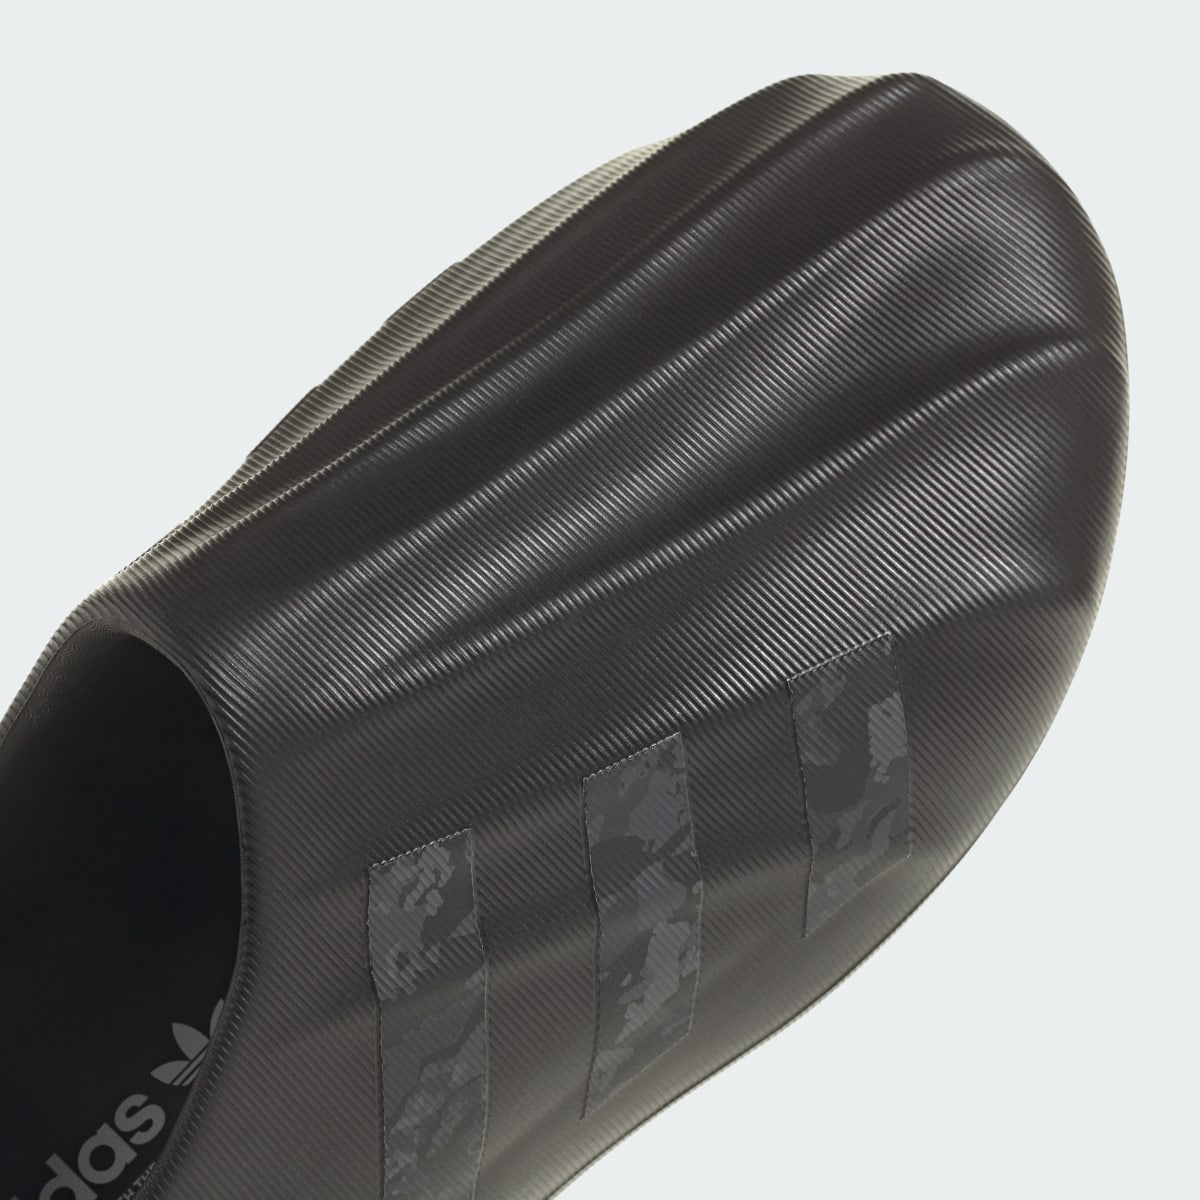 Adidas AdiFOM Superstar Ayakkabı. 10